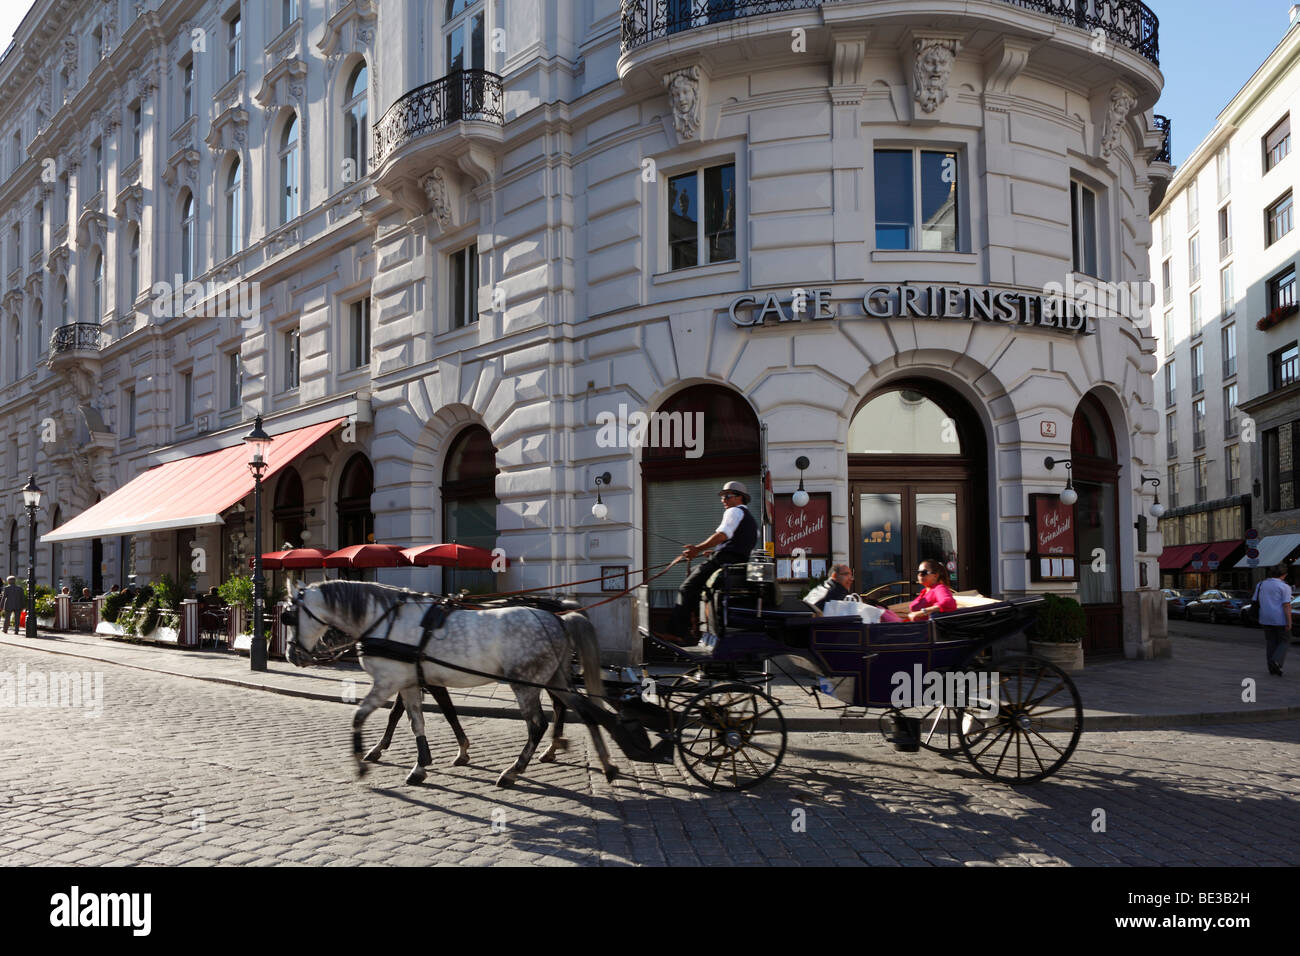 Fiaker carriage in front of the Griensteidl Cafe, Michaelerplatz square, Vienna, Austria, Europe Stock Photo